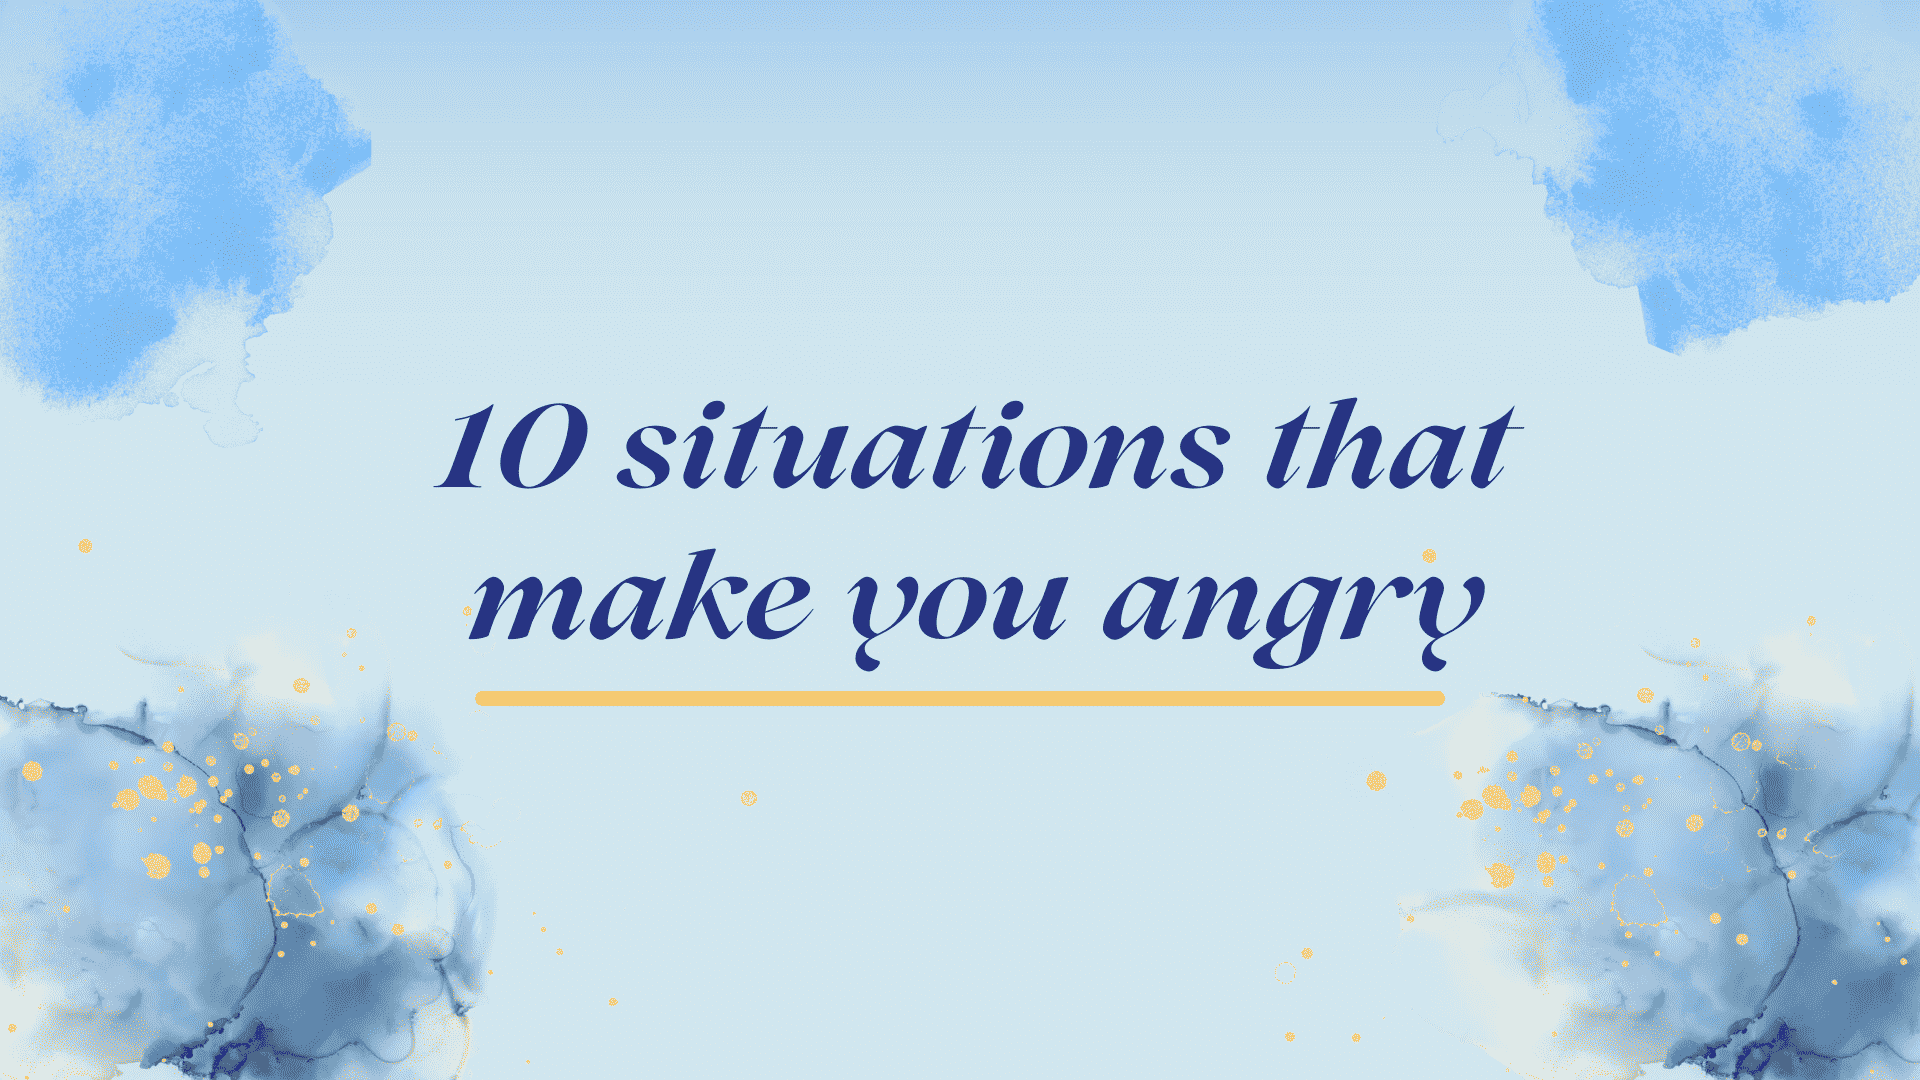 10 situations that make you angry